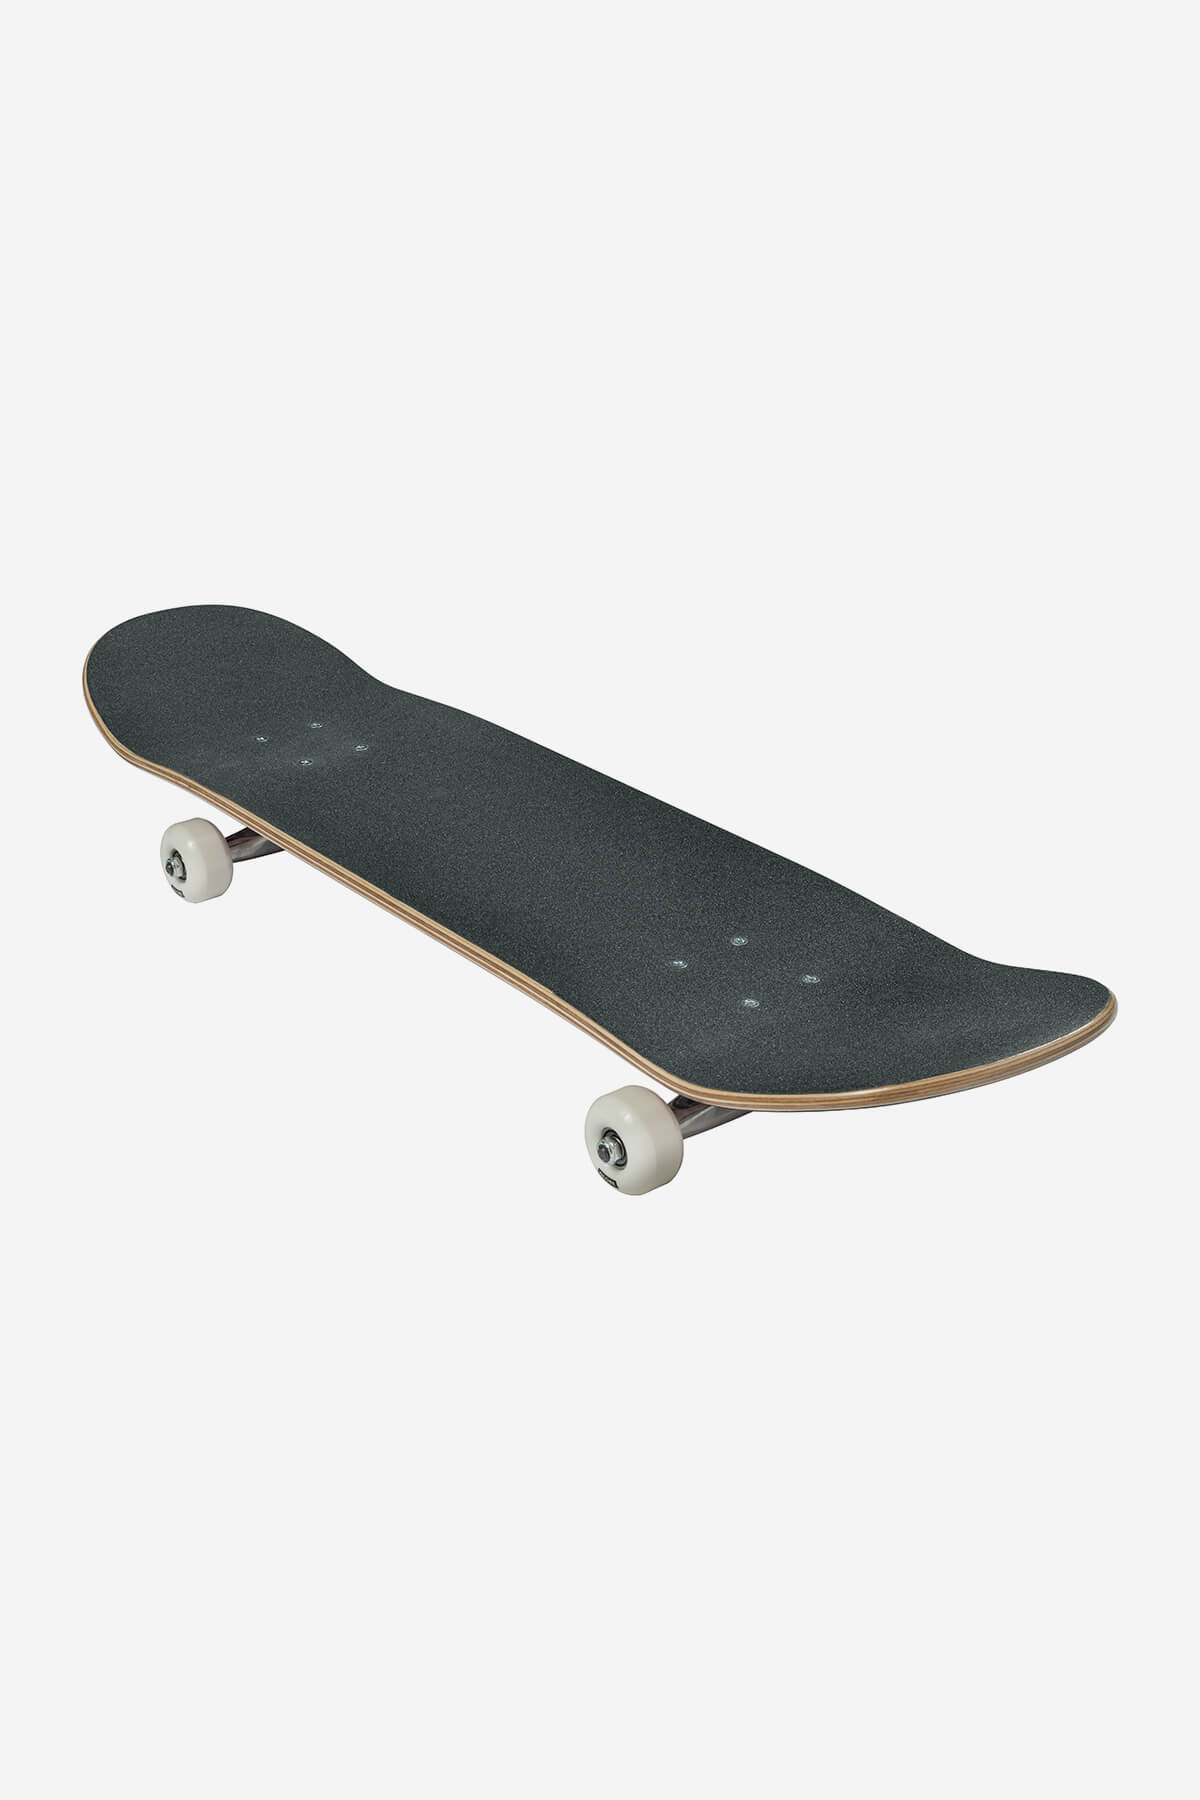 Globe - G0 Fubar - Black/Pink - 8.0" Compleet Skateboard